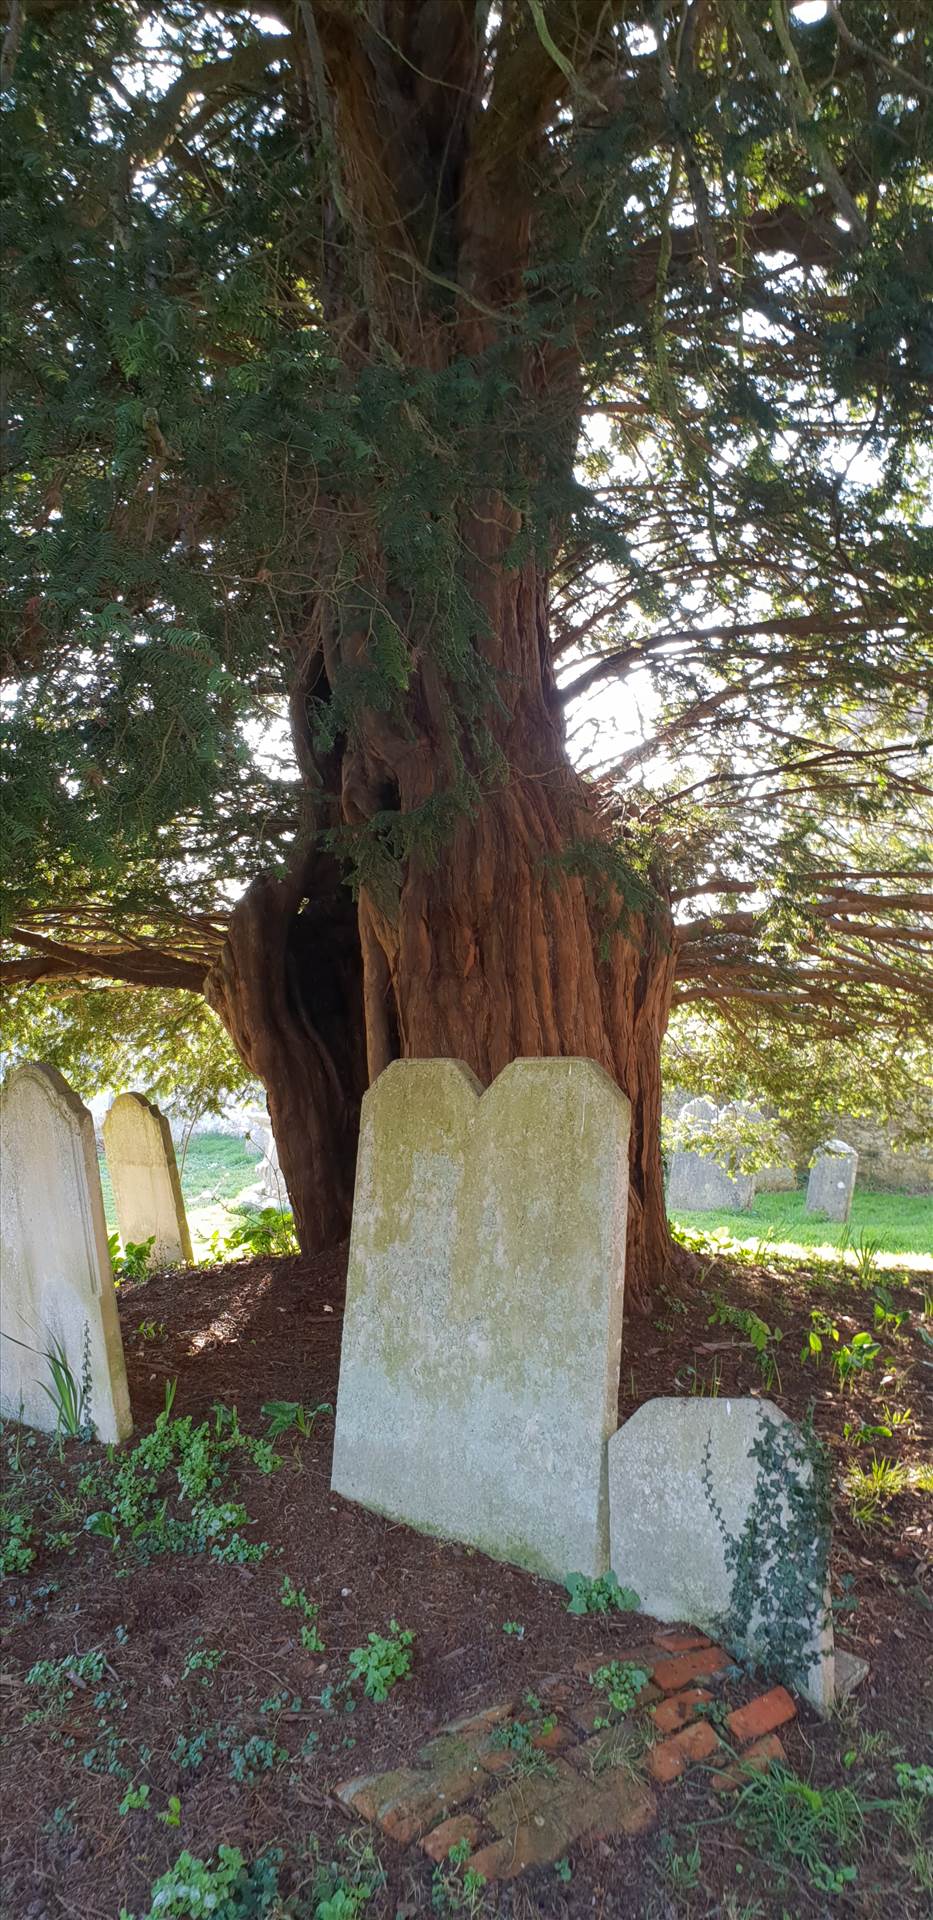 Amberley Yew Tree St Martins 23 Feb 2019.jpg  by Mo